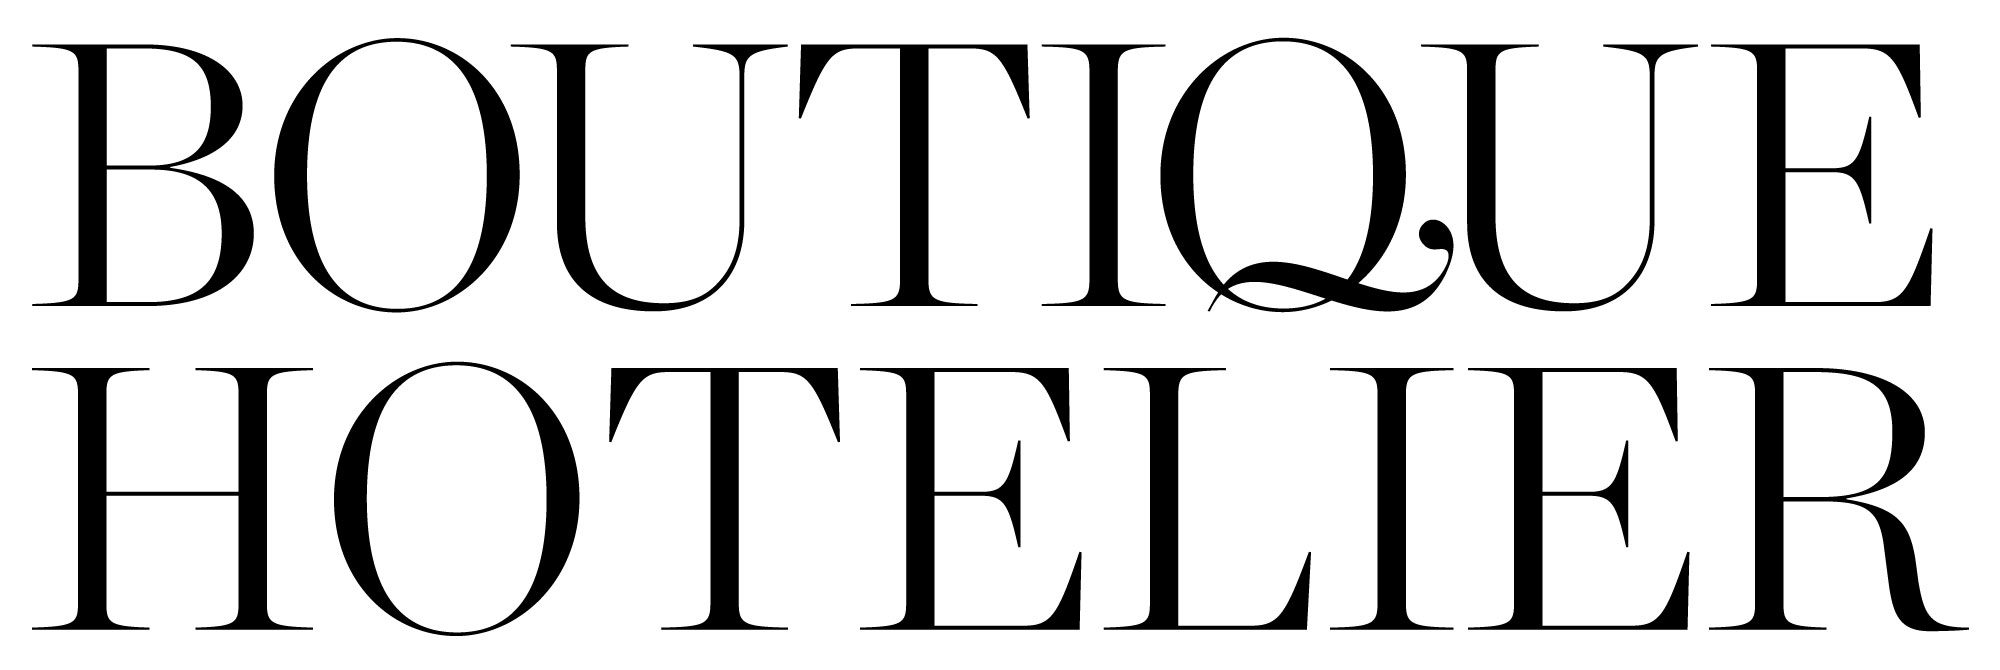 Boutique Hotelier logo